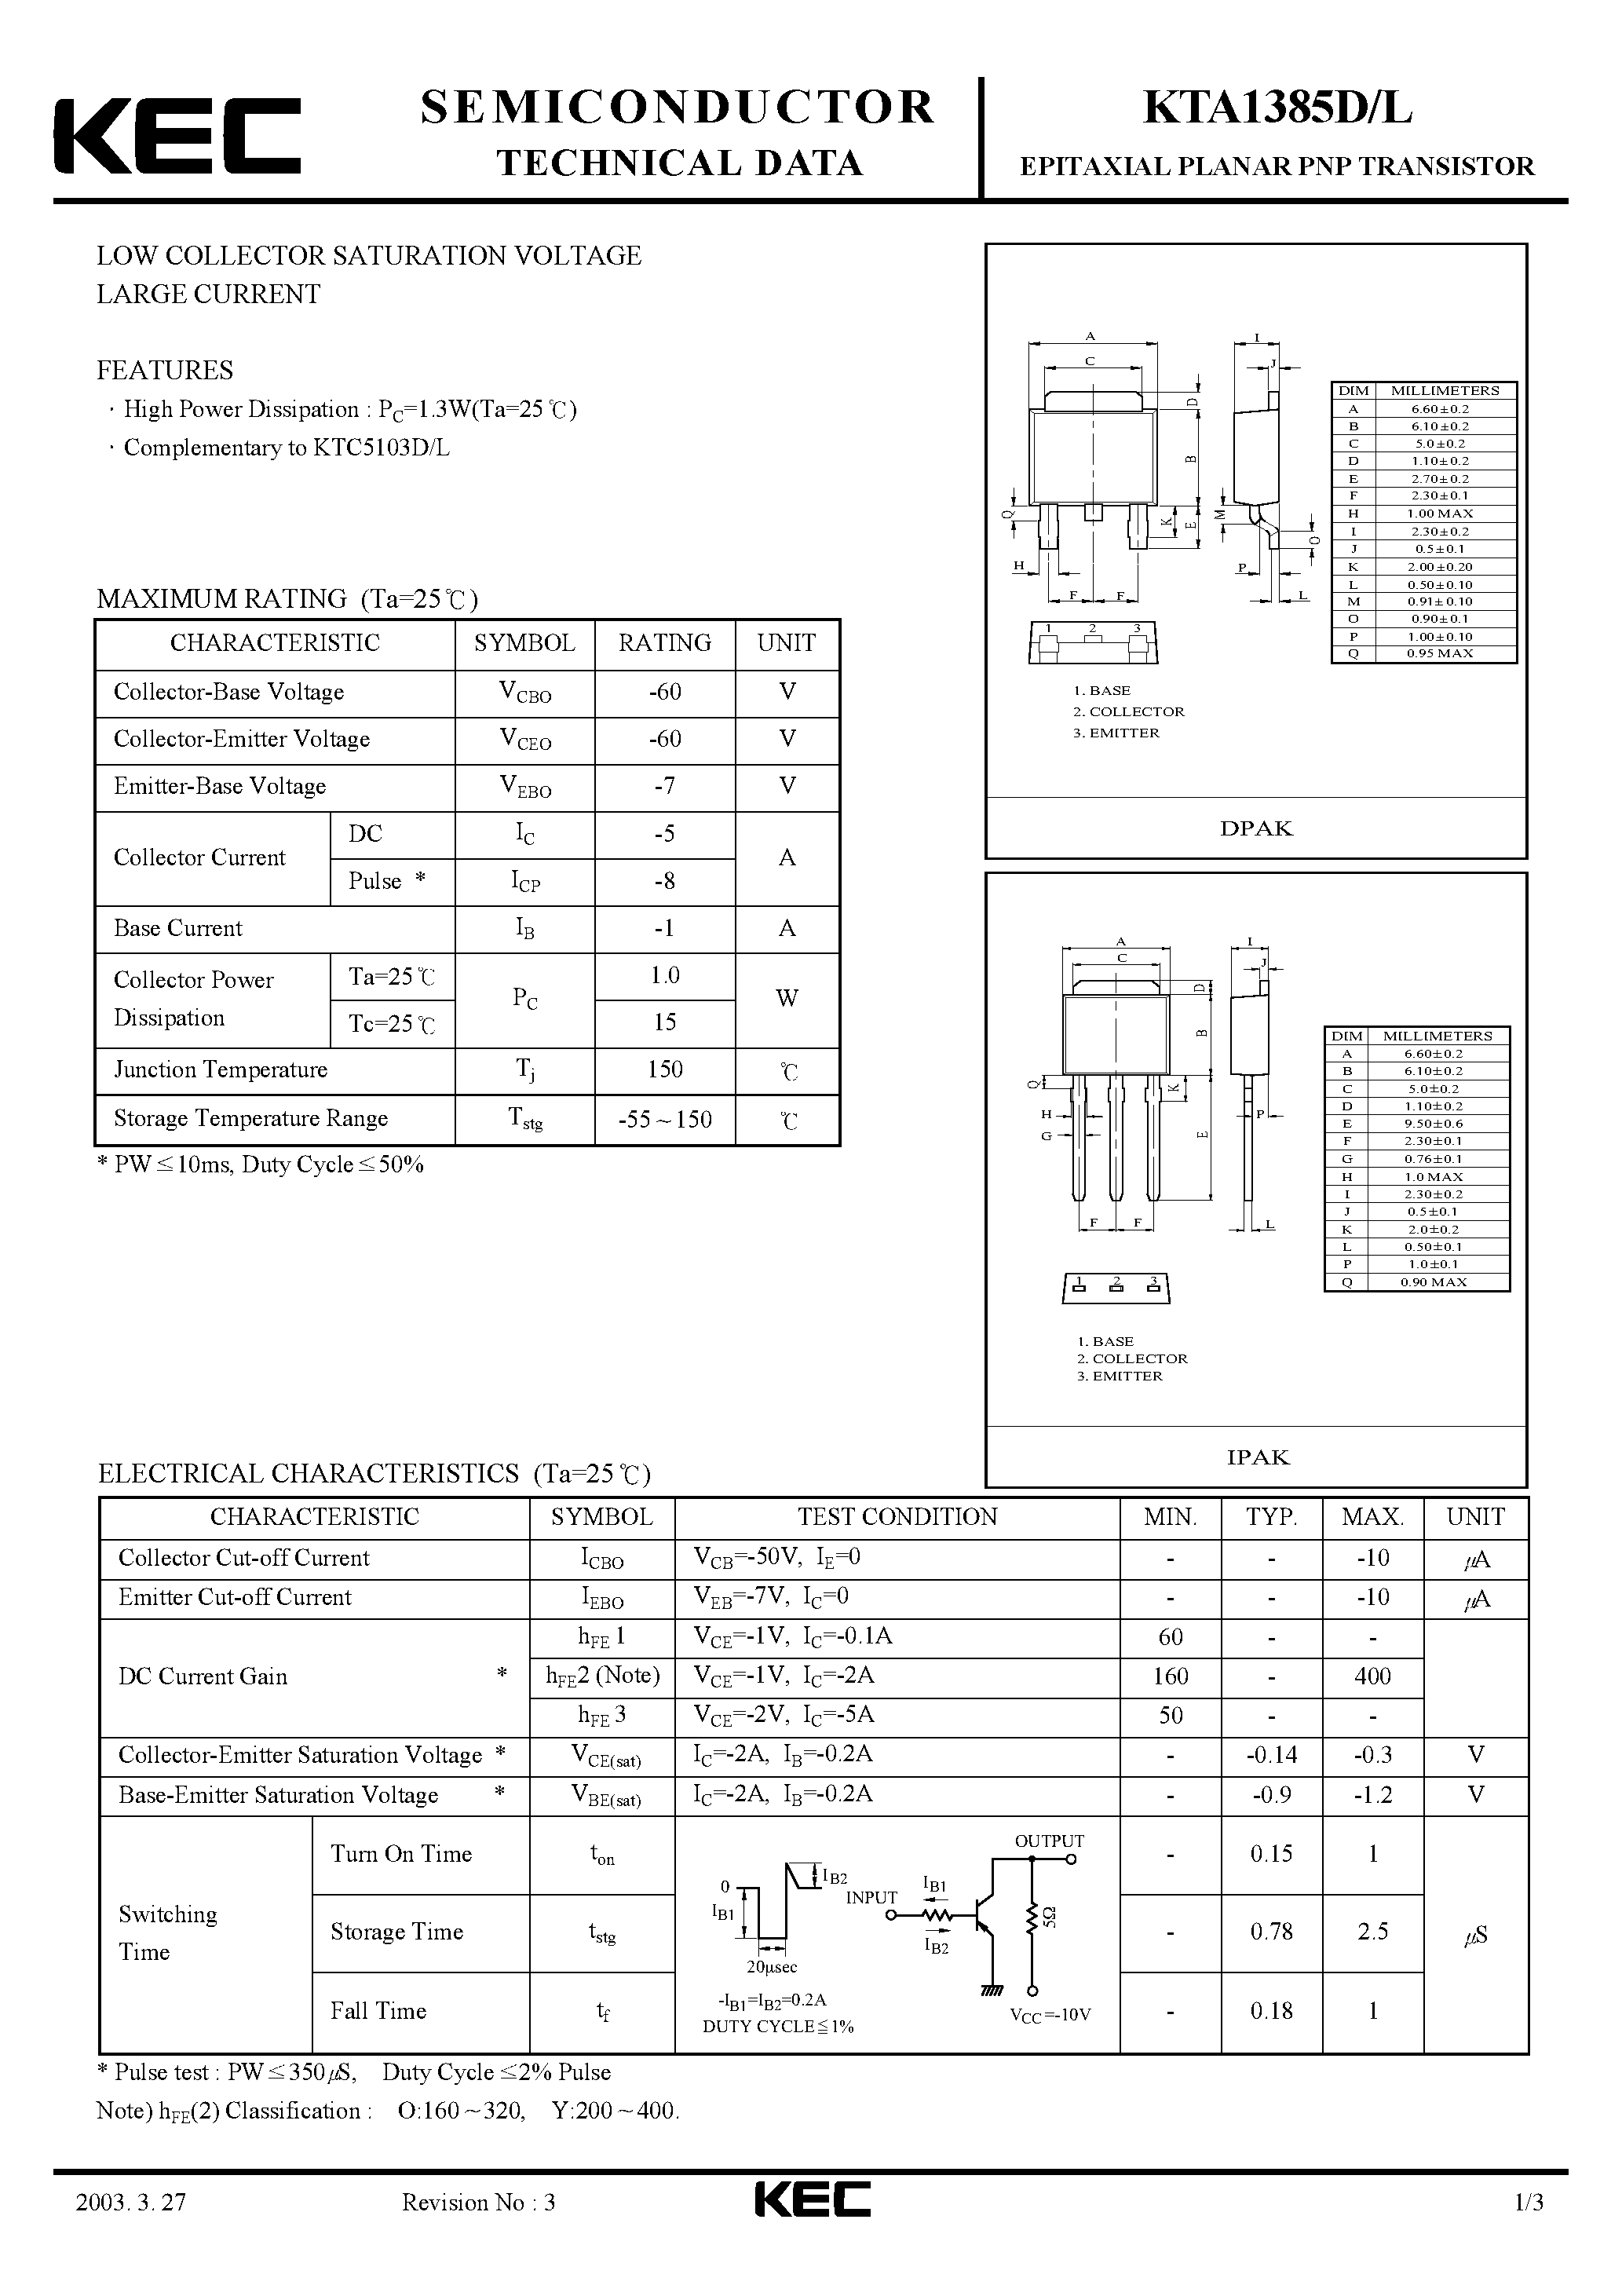 Datasheet KTA1385L - EPITAXIAL PLANAR PNP TRANSISTOR (LOW COLLECTOR SATURATION VOLTAGE LARGE CURRENT) page 1